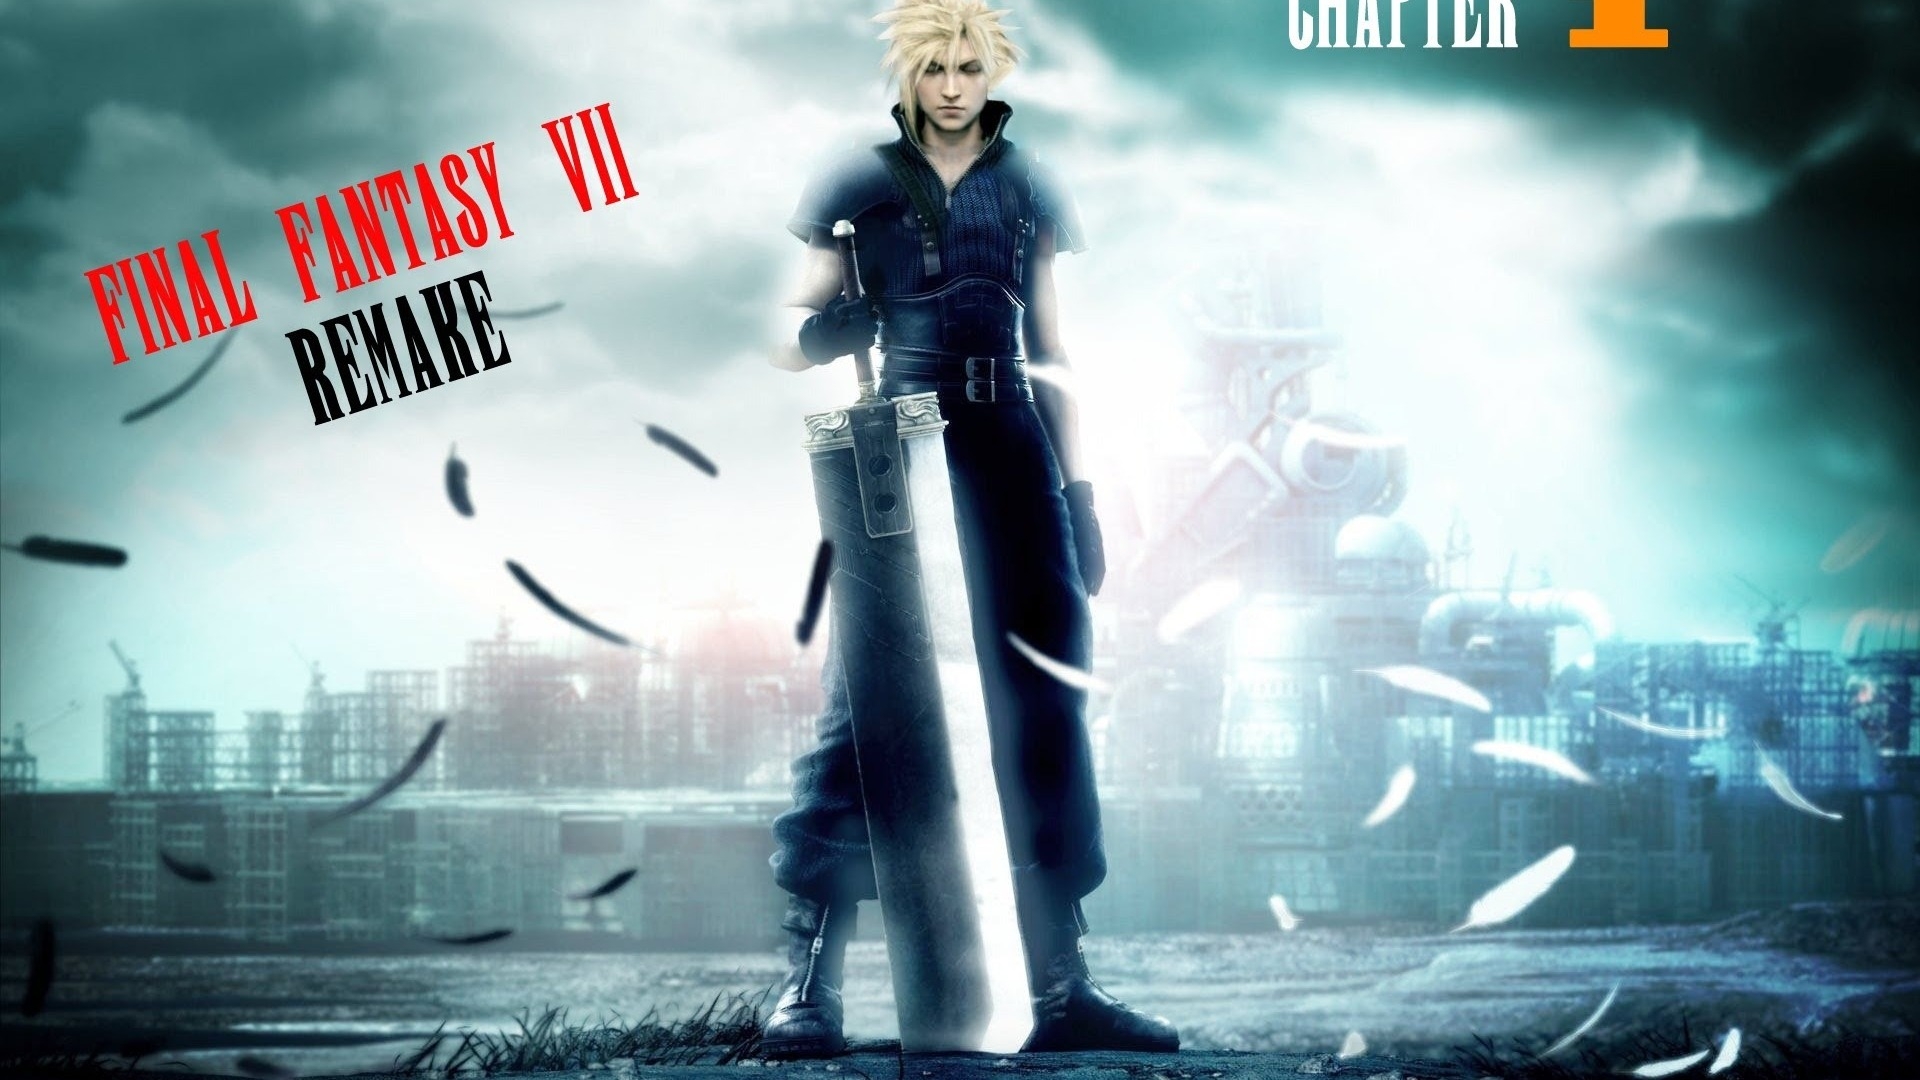 Final Fantasy 7 Remake for 1920 x 1080 HDTV 1080p resolution